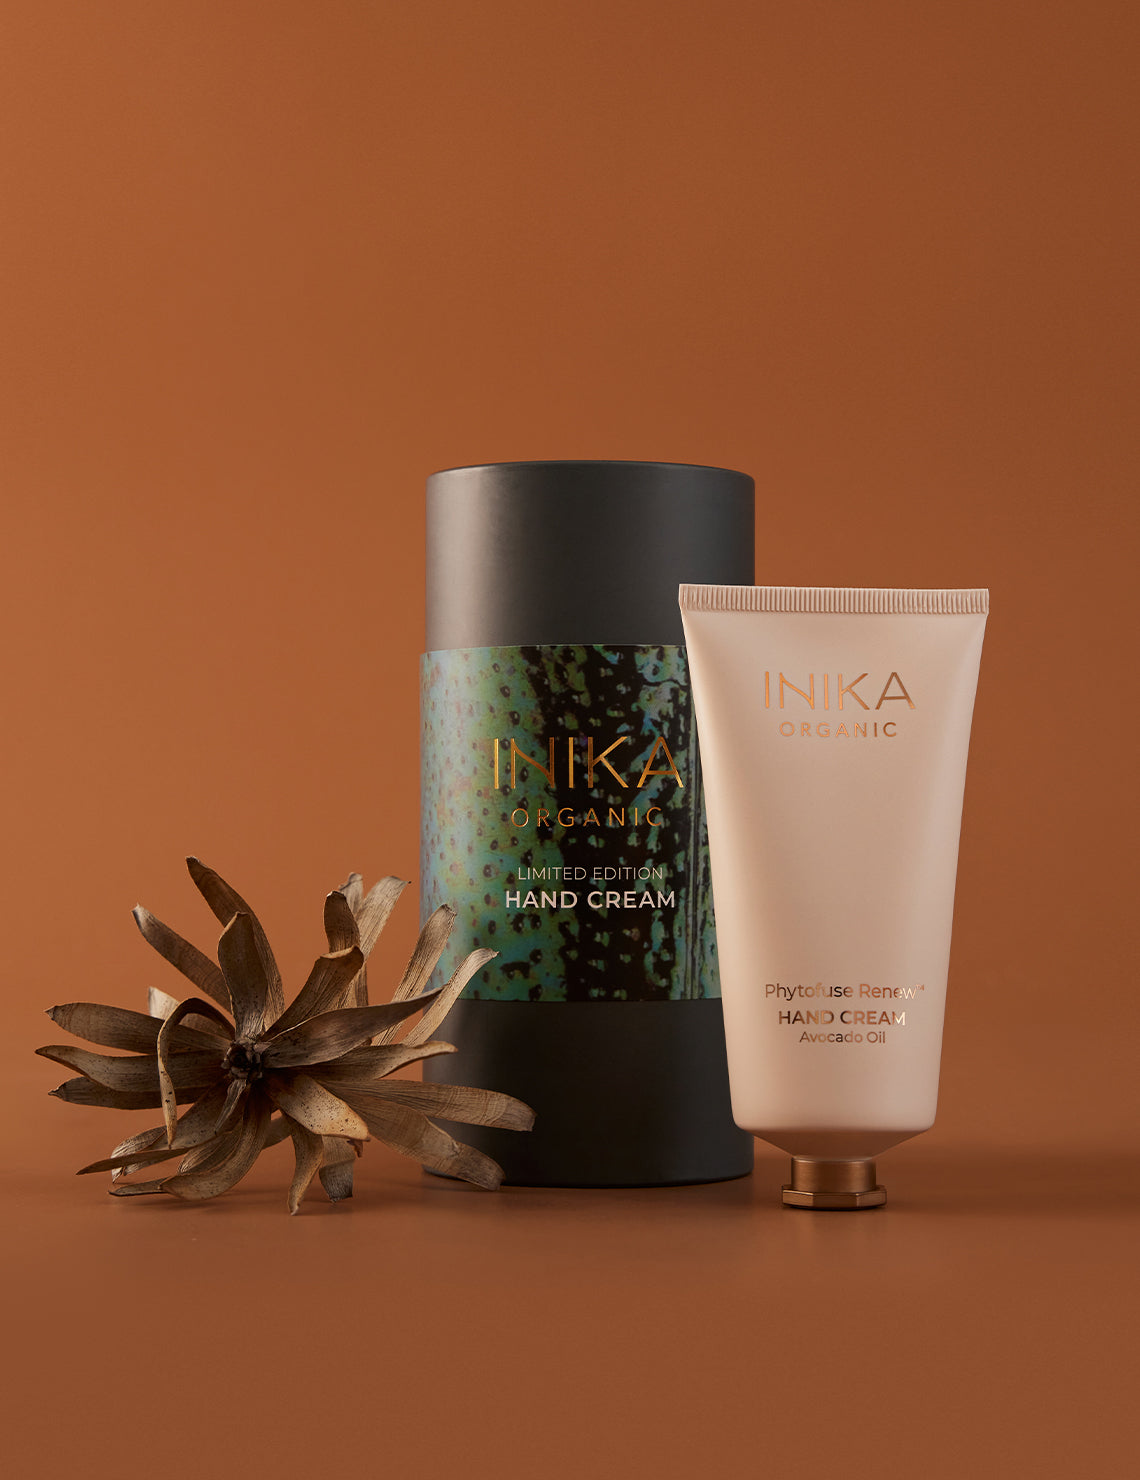 INIKA Organic Limited Edition Hand Cream